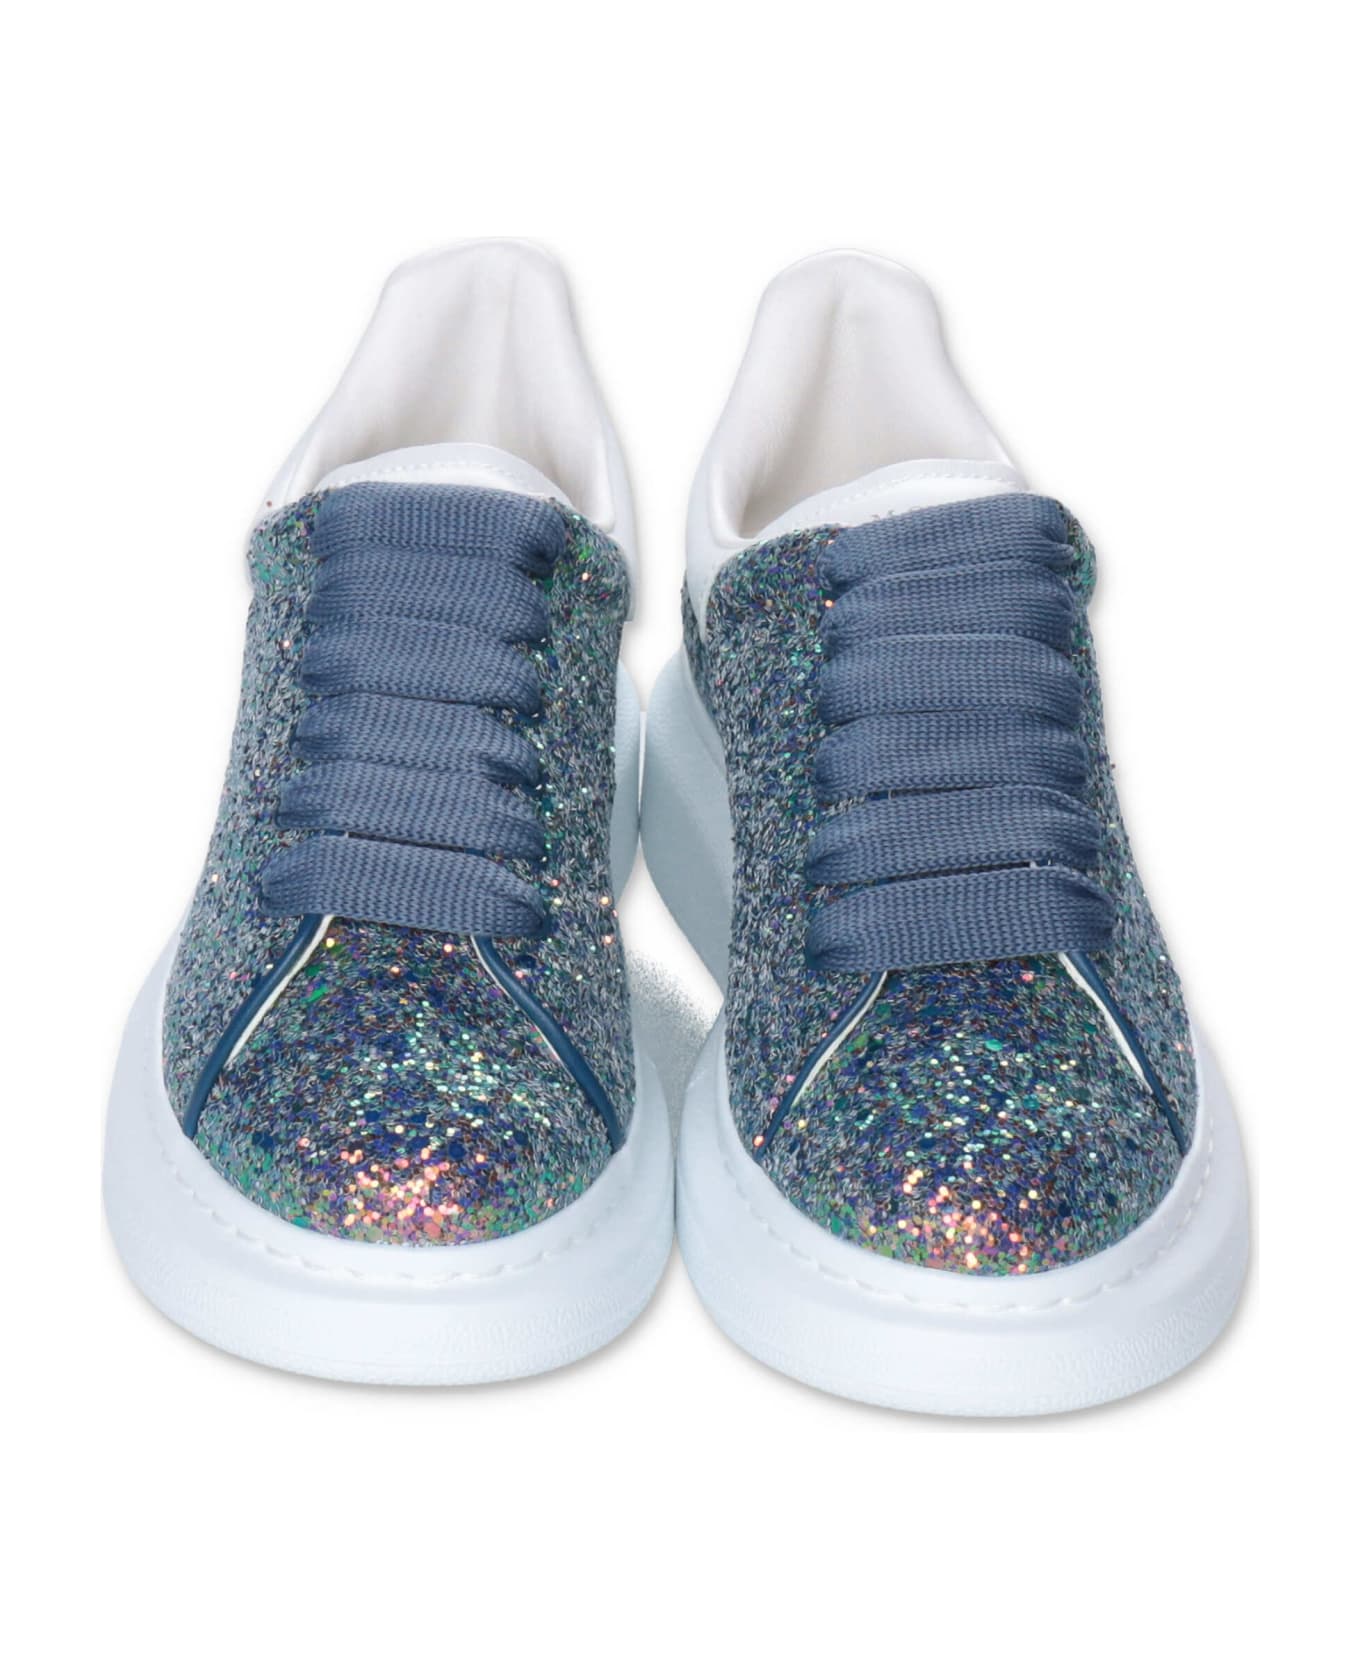 Alexander McQueen Sneakers Blu Glitterate In Pelle - Blu